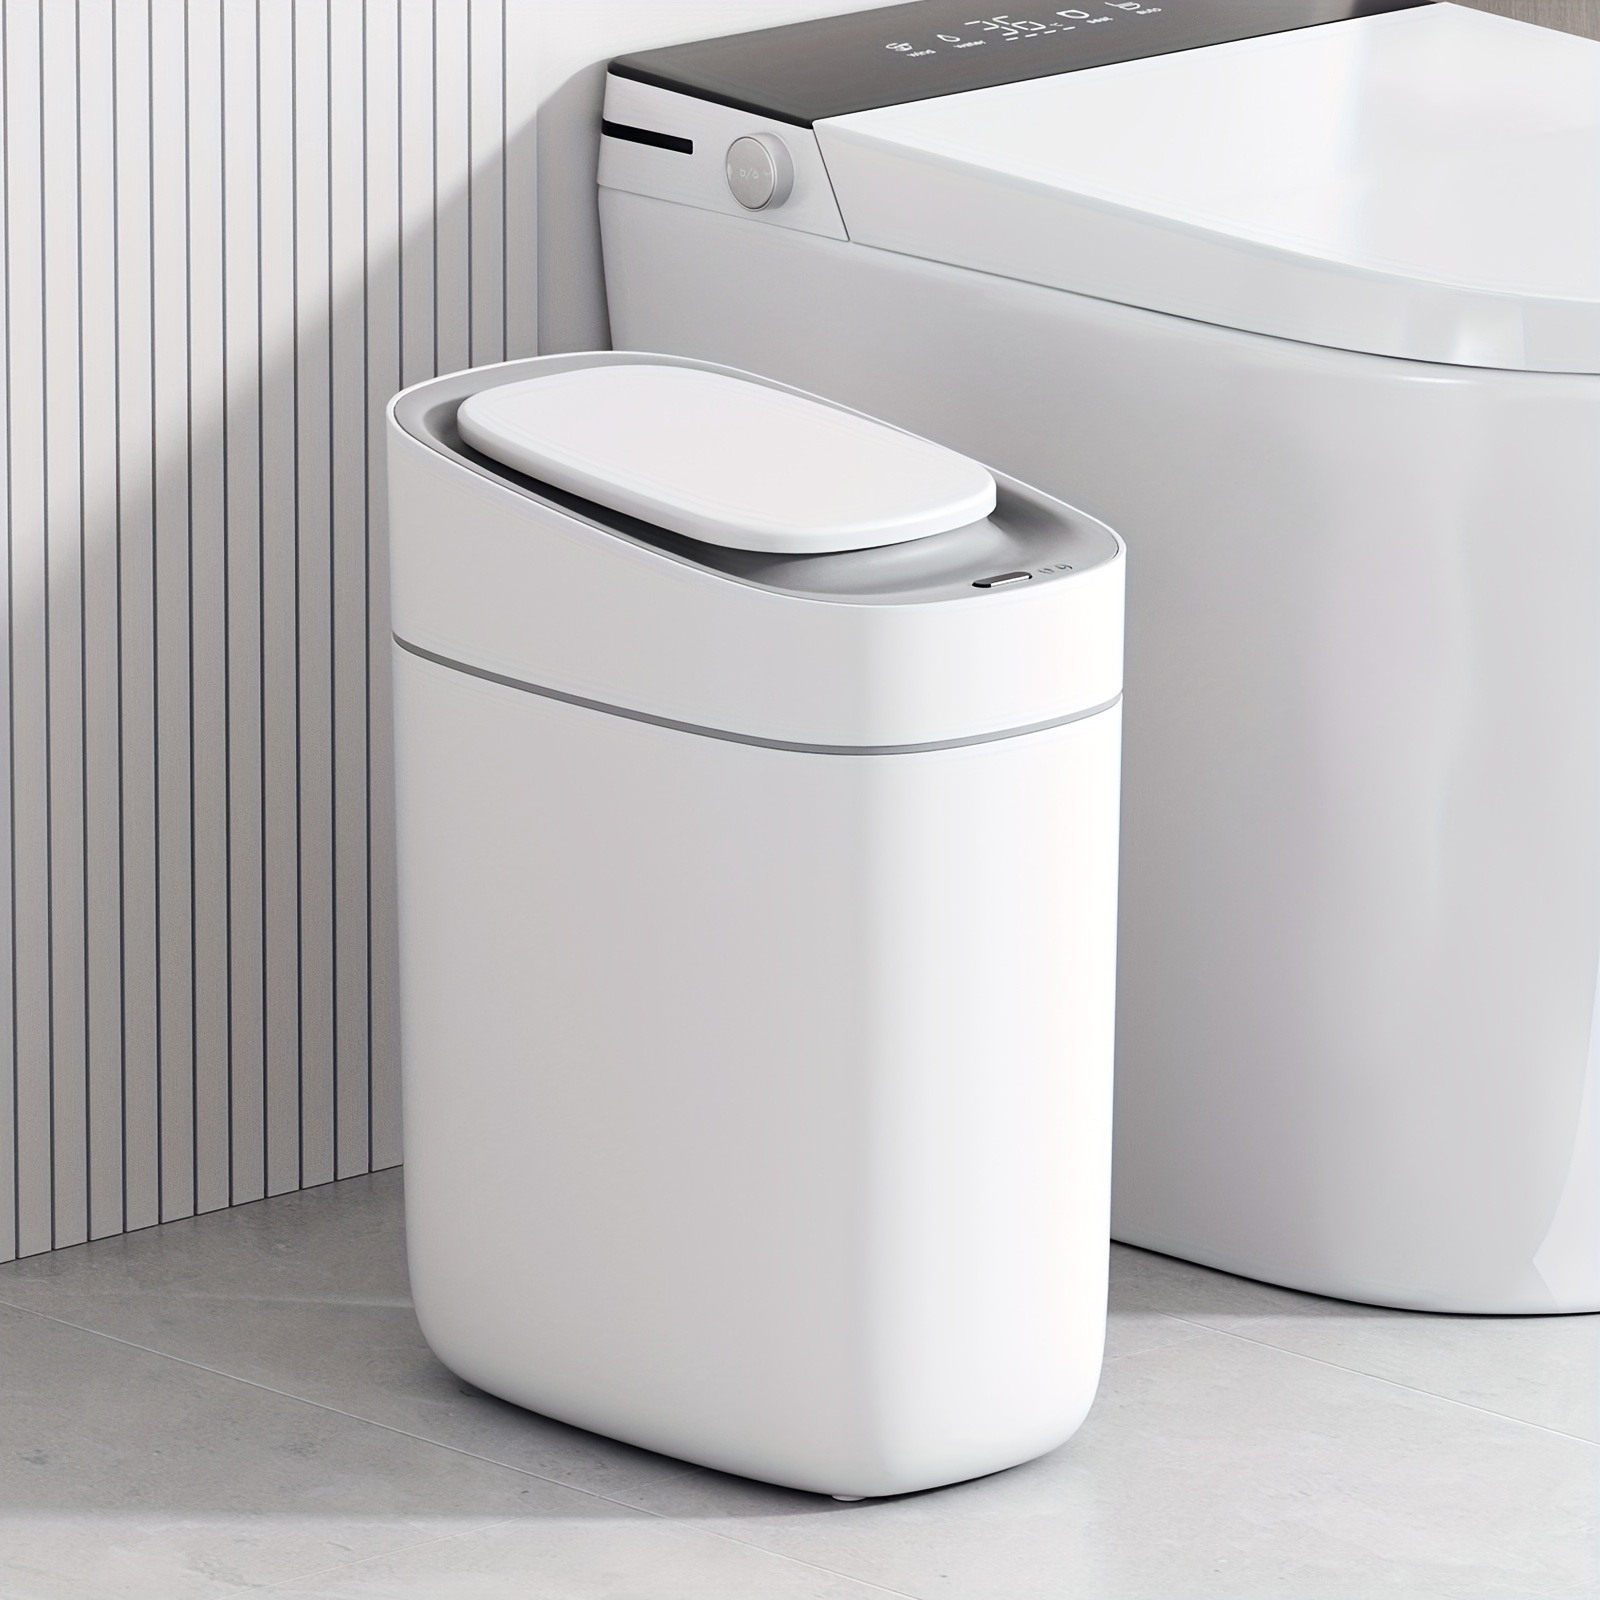 

Elpheco Automatic Bathroom Trash Can With Lid 2.5 Gallon Slim Sensor Garbage Can, 9l Narrow Plastic Trash Bin, Motion Sensor Trash Bin For Bedroom, Living Room, Narrow Space